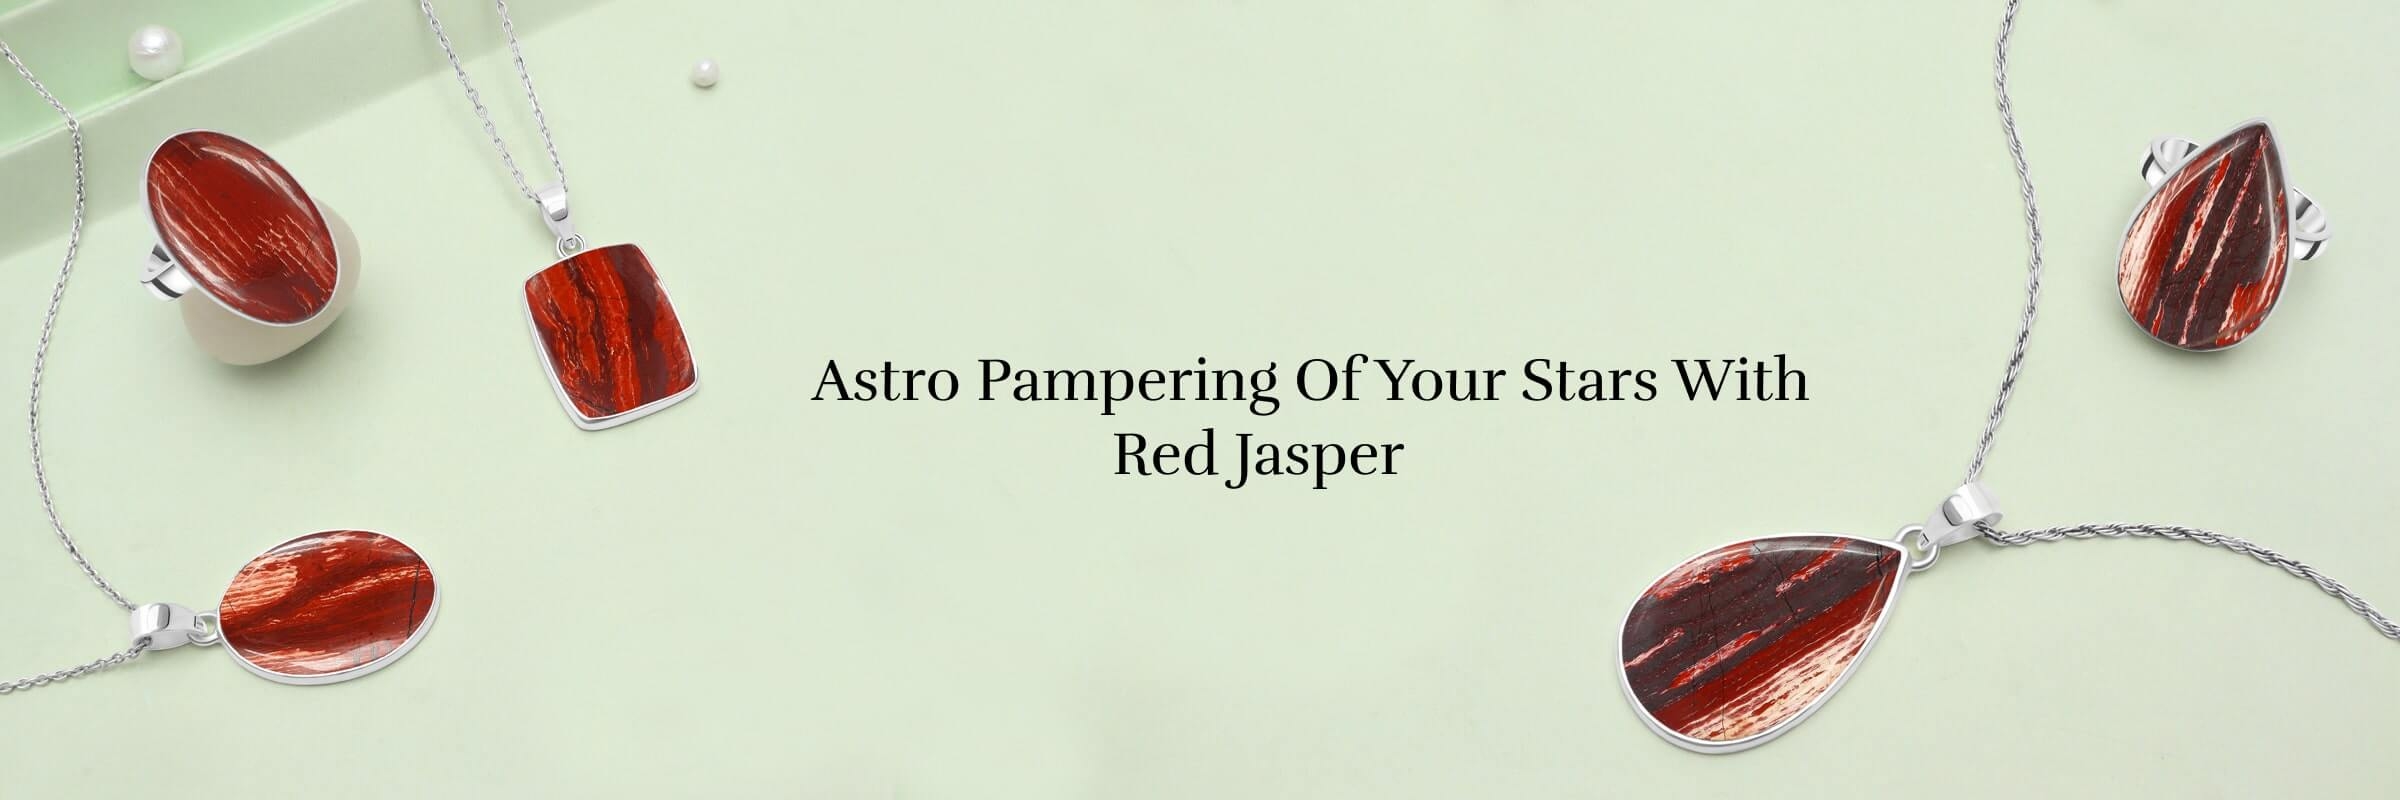 Zodiac sign associated with red Jasper